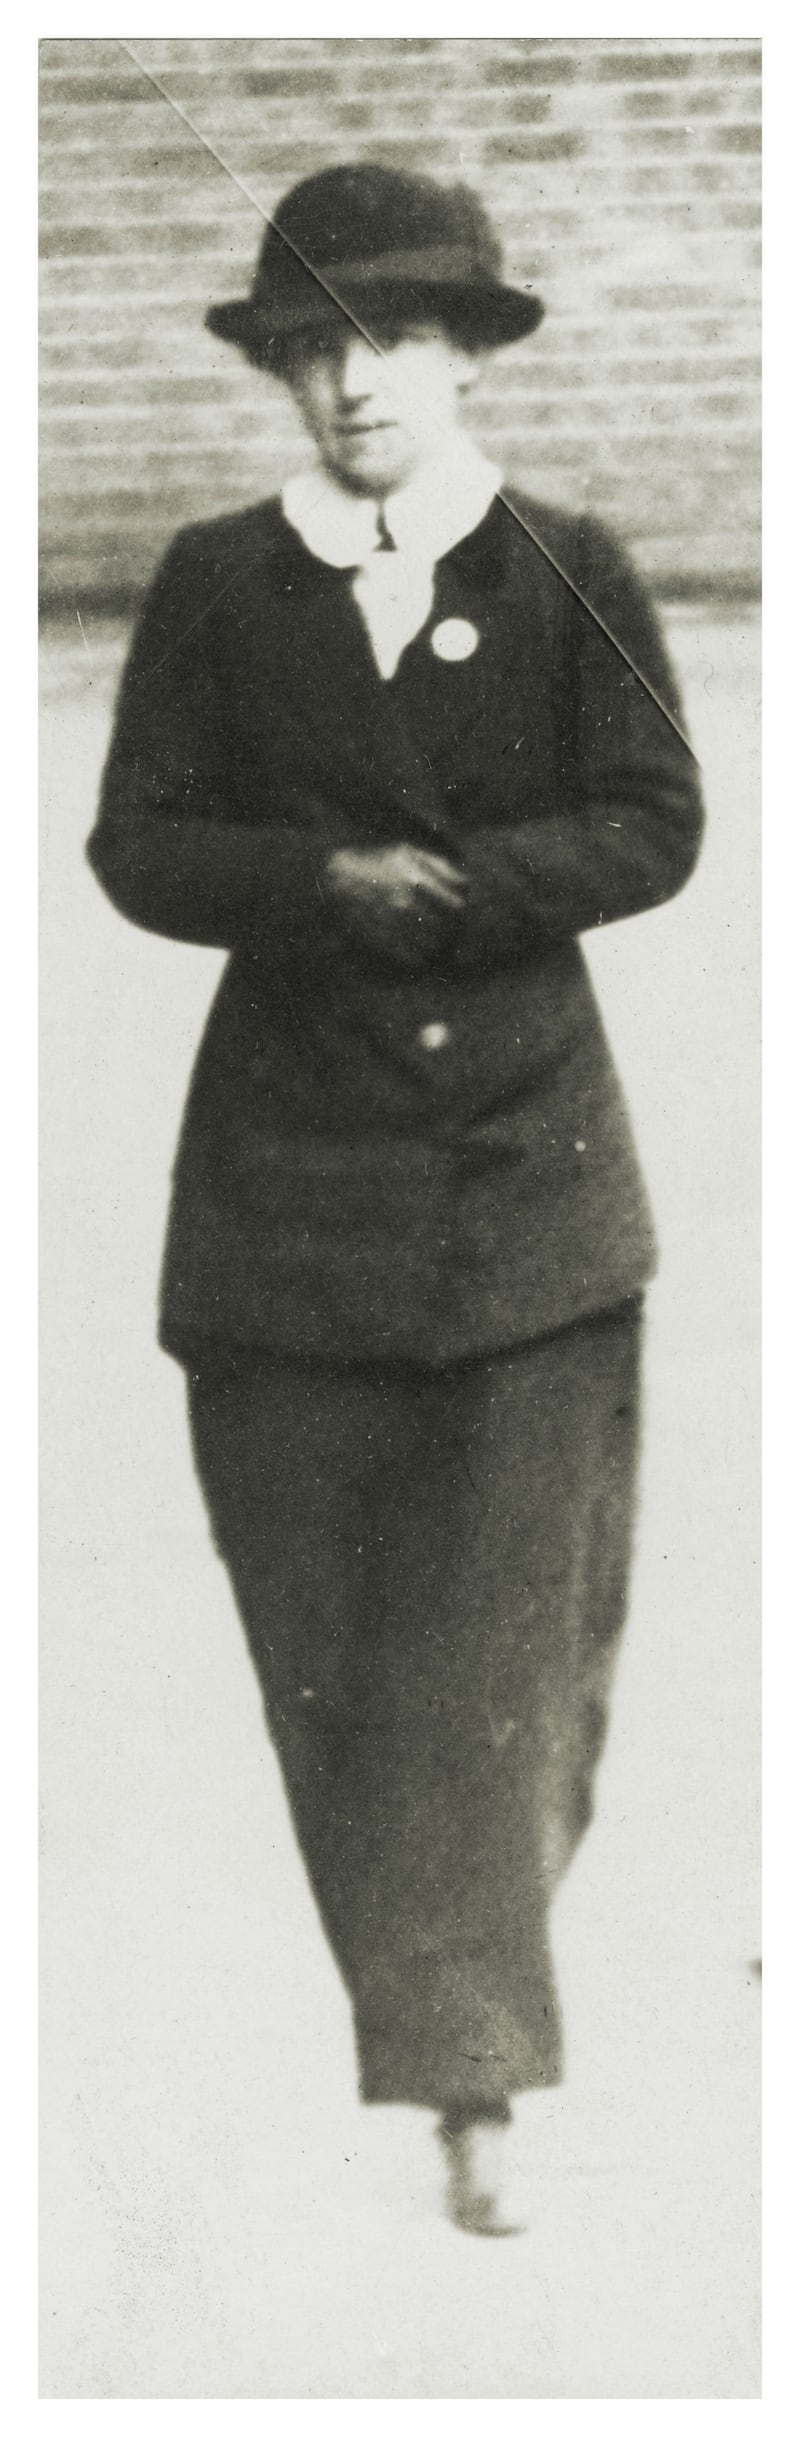 Surveillance photograph of Mary Richardson 1914.